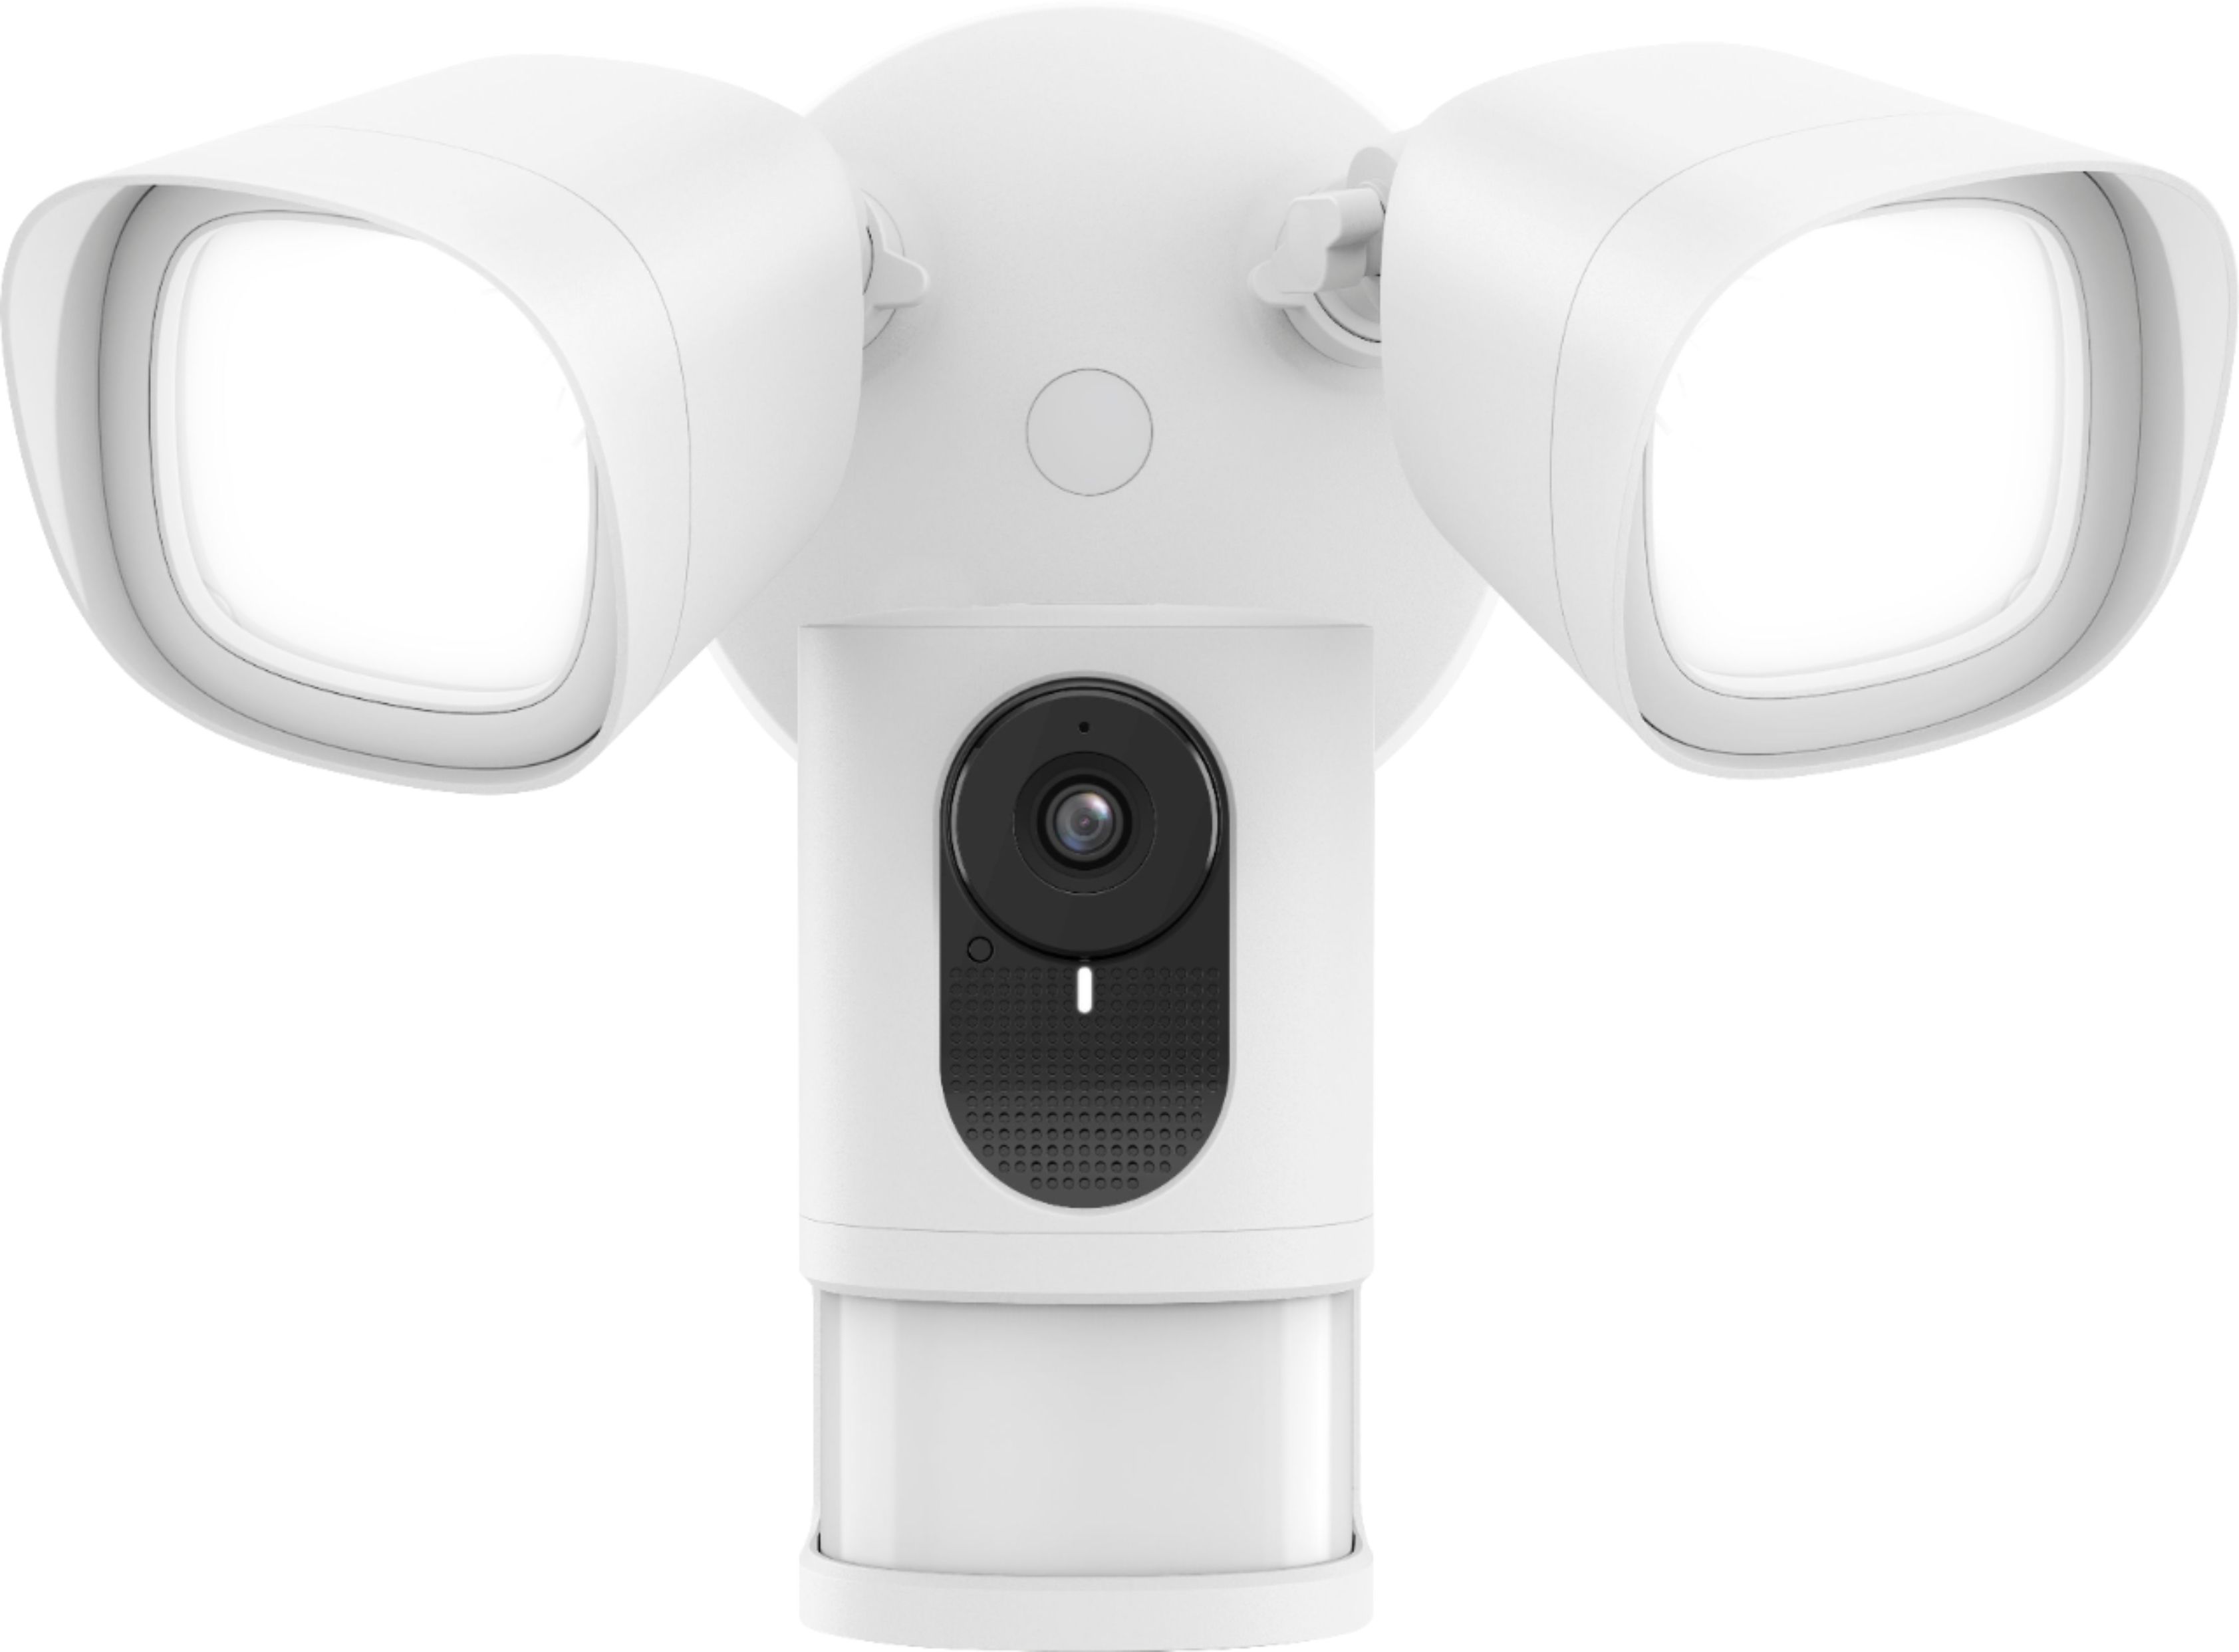 flood light security camera wireless